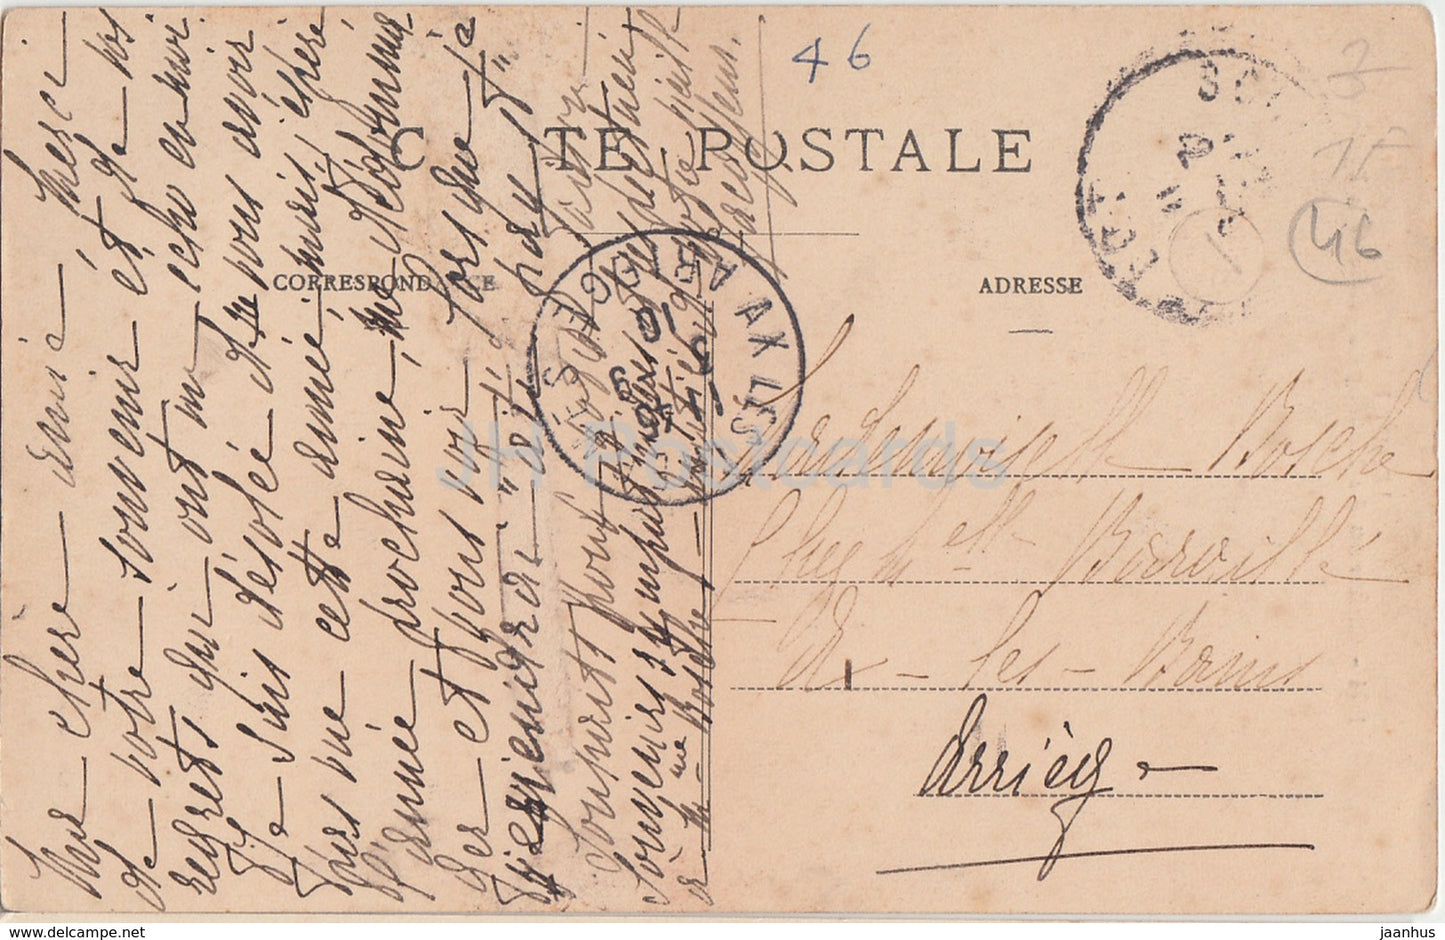 Le Lot Illustre - Chateau de Latreyne - Bords de la Dordogne - Schloss - 1154 - alte Postkarte - 1910 - Frankreich - gebraucht